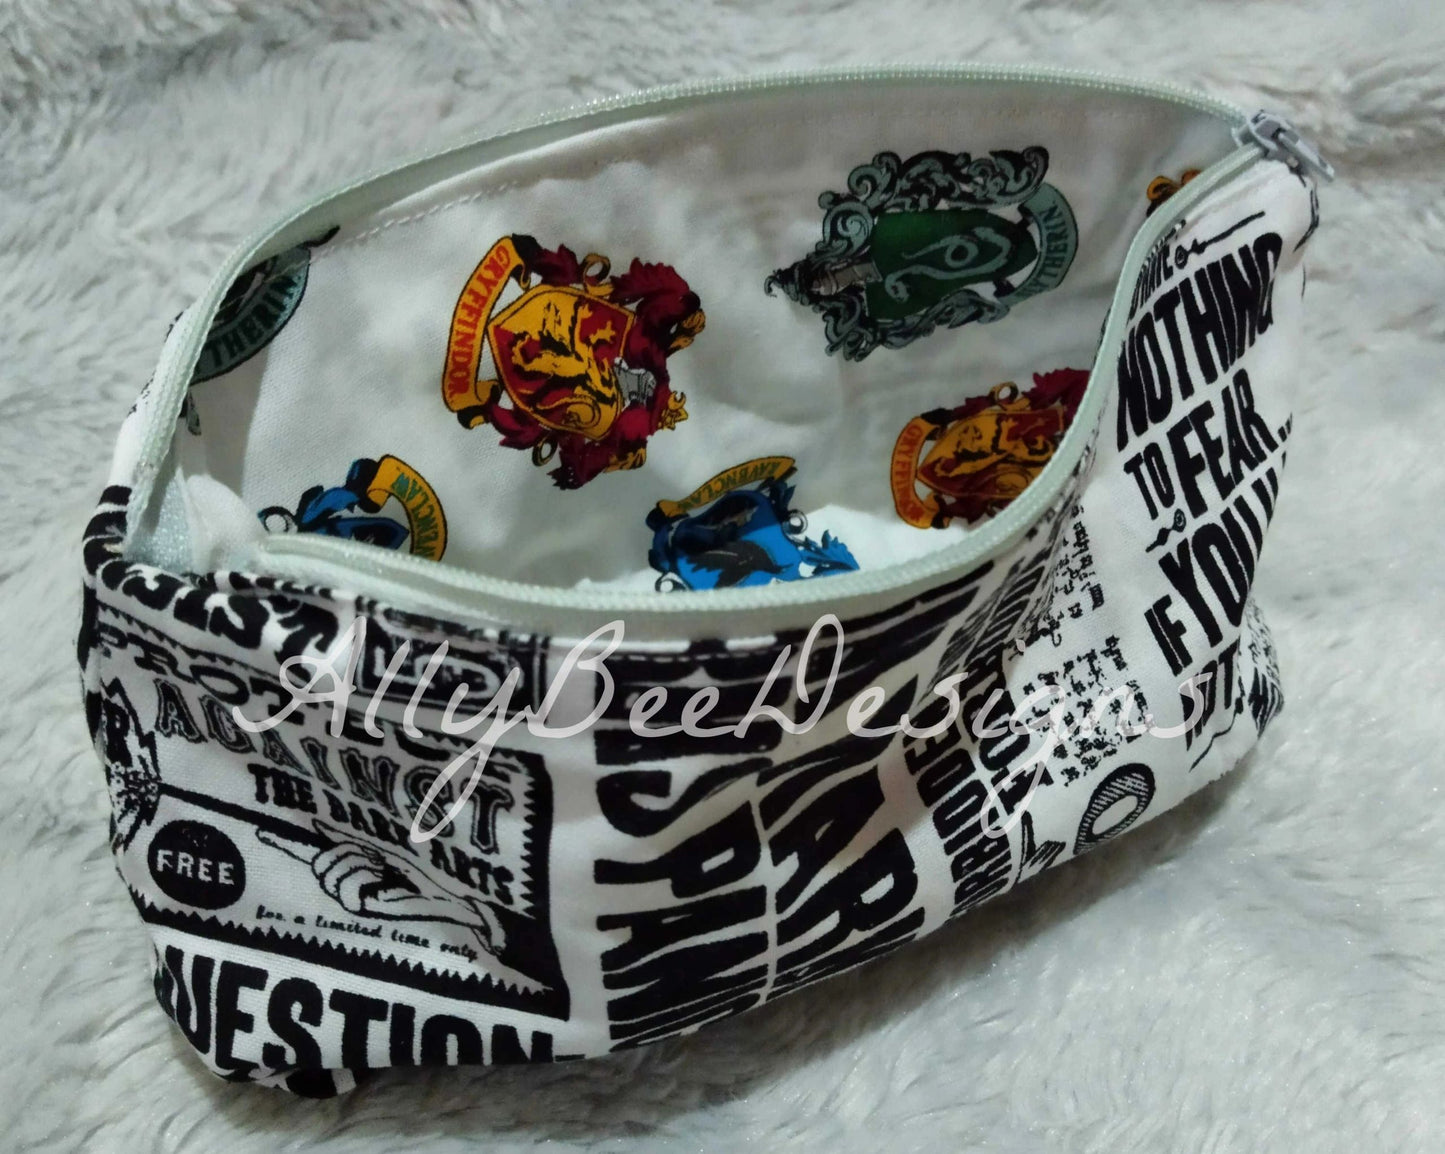 100% cotton handmade bag - various patterns